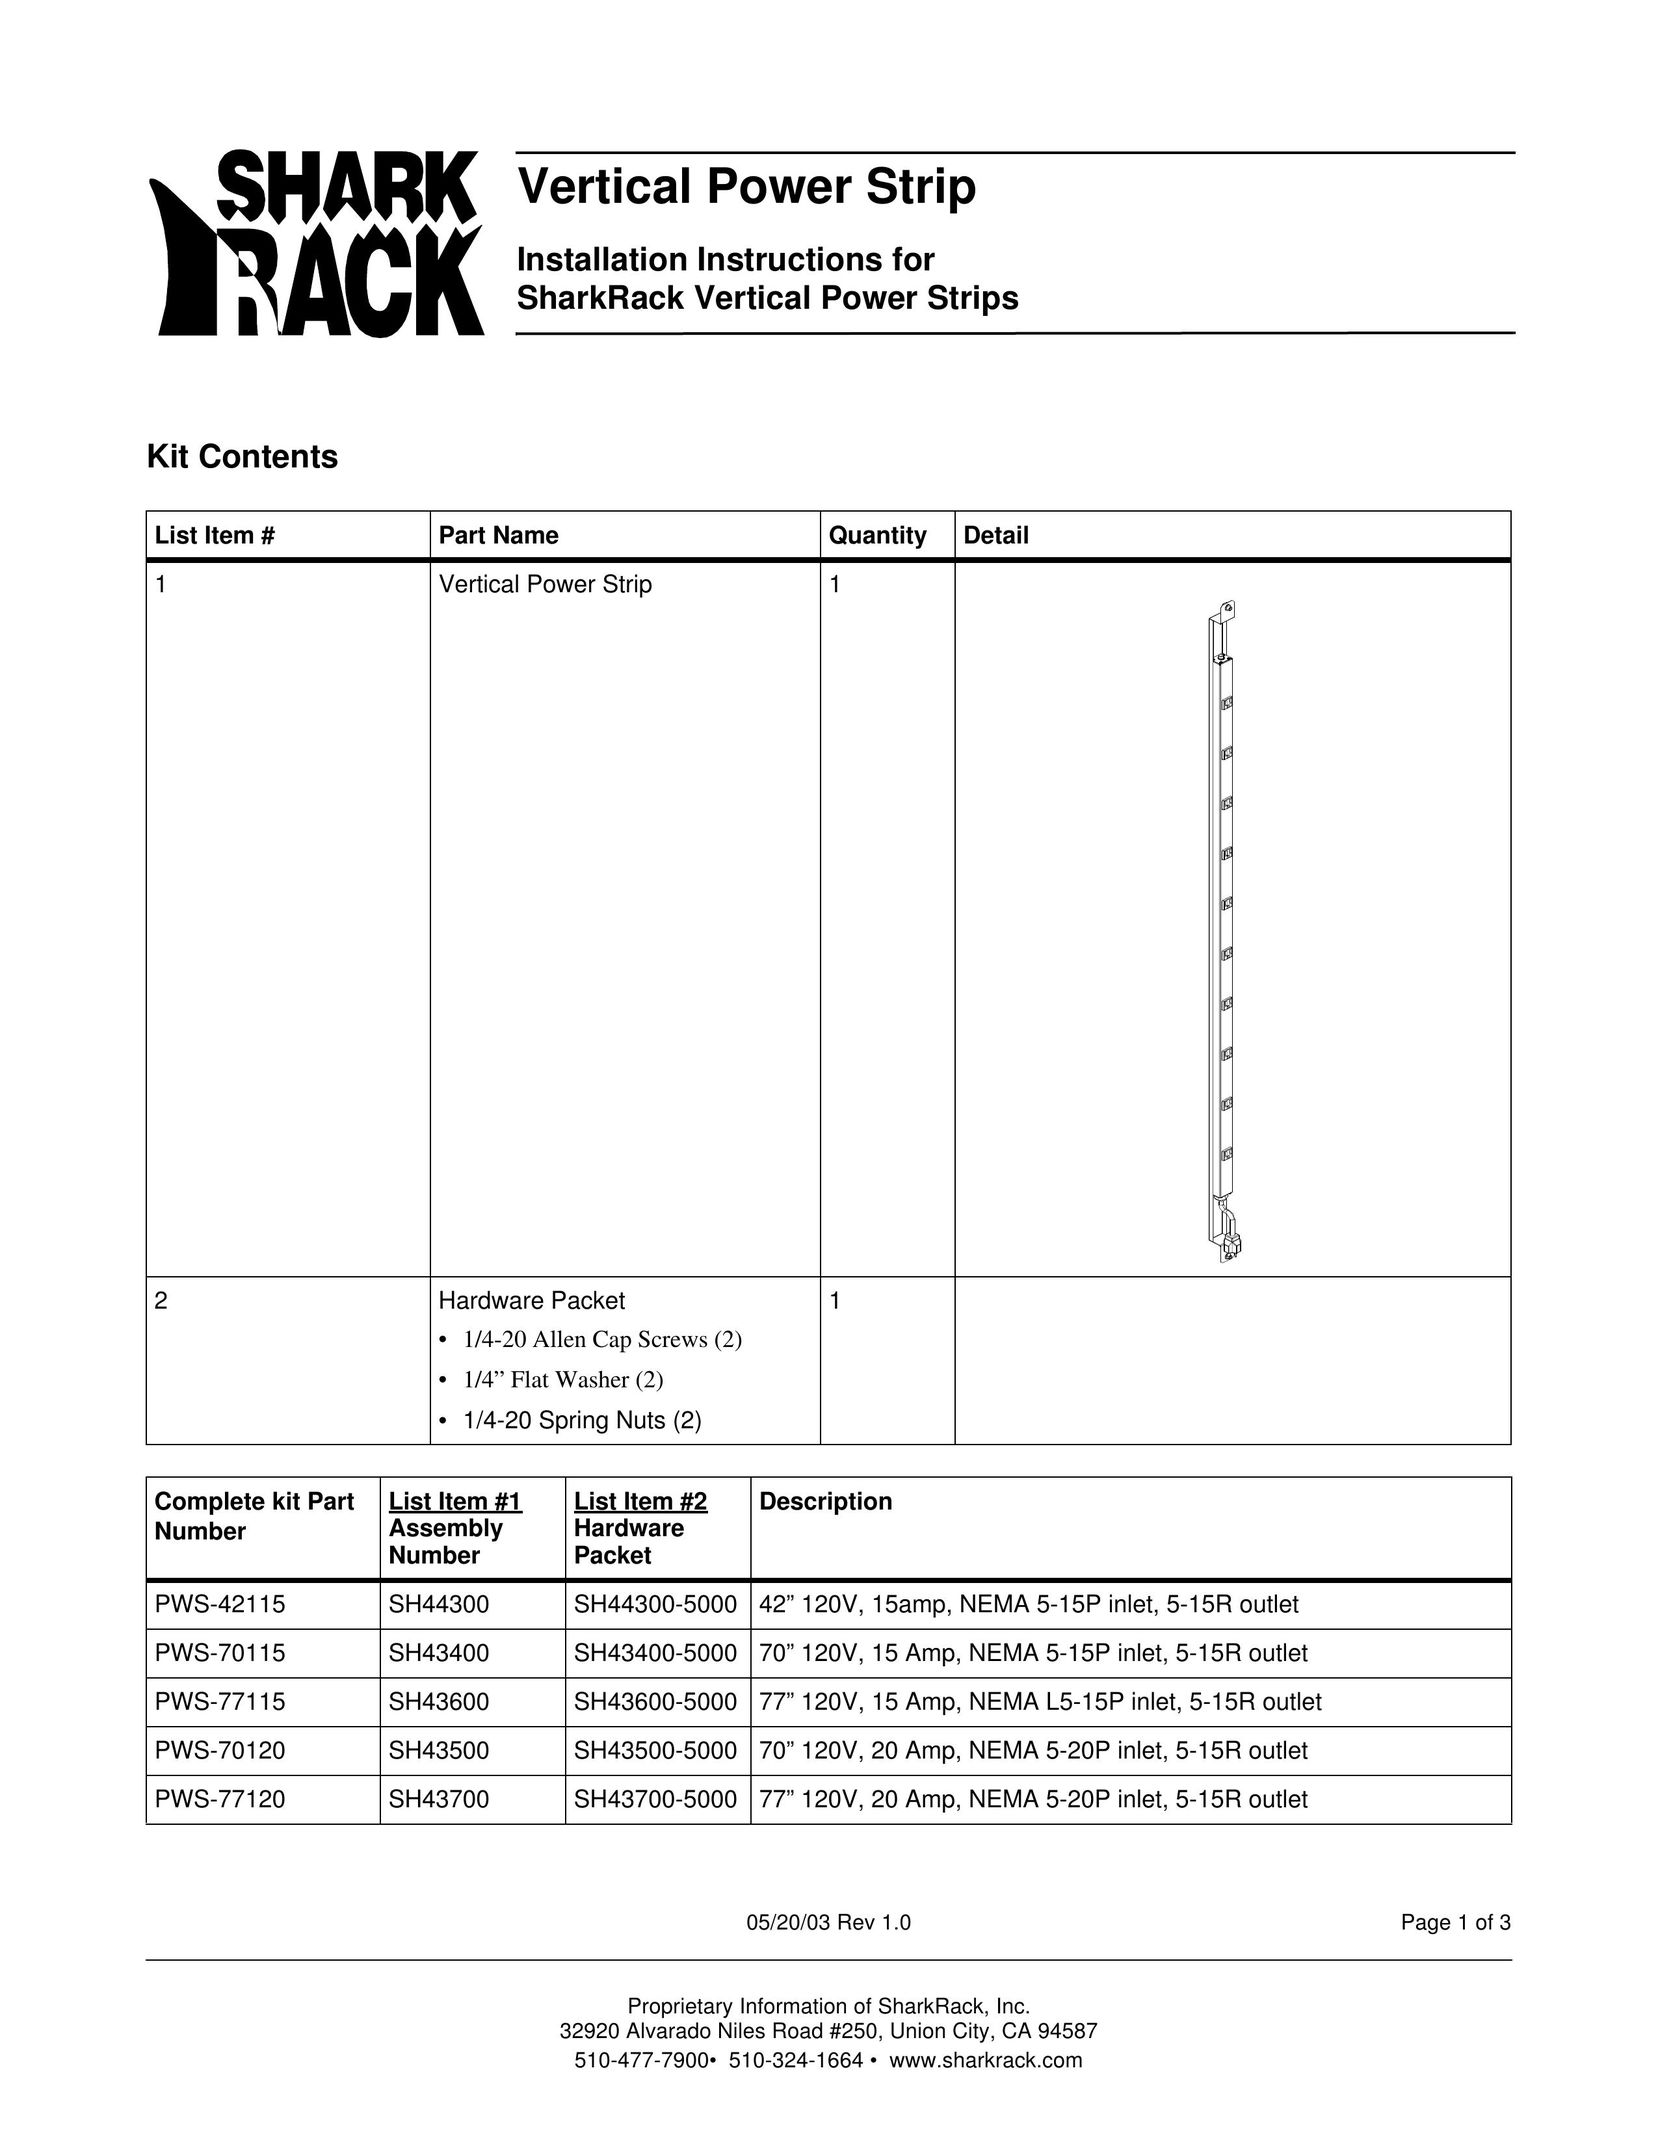 SharkRack PWS-70120 Surge Protector User Manual